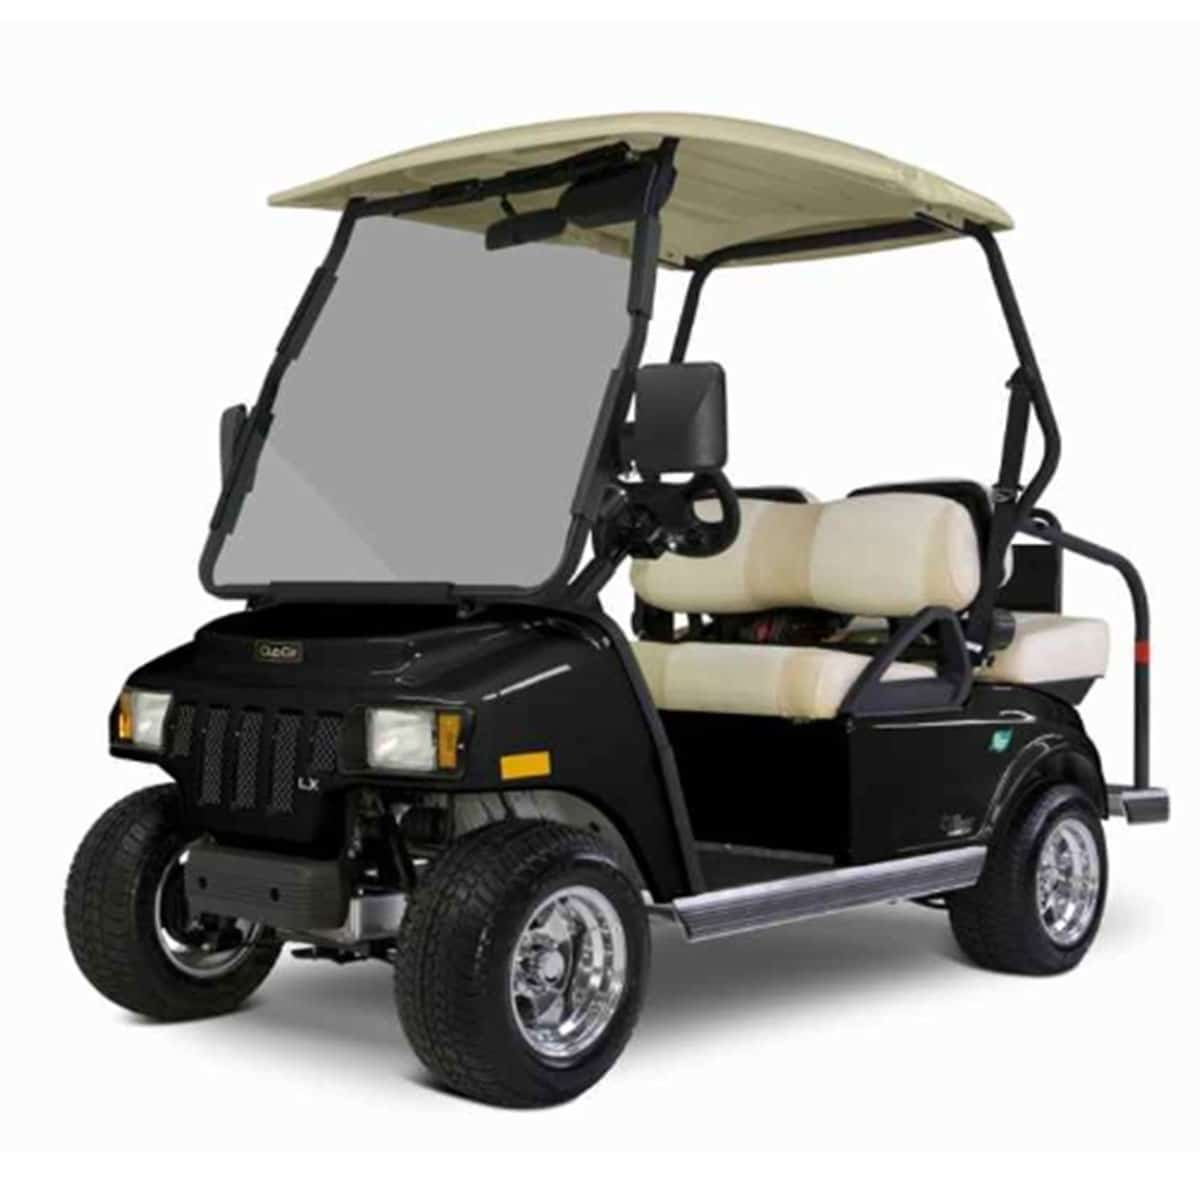 Street Legal Golf Carts